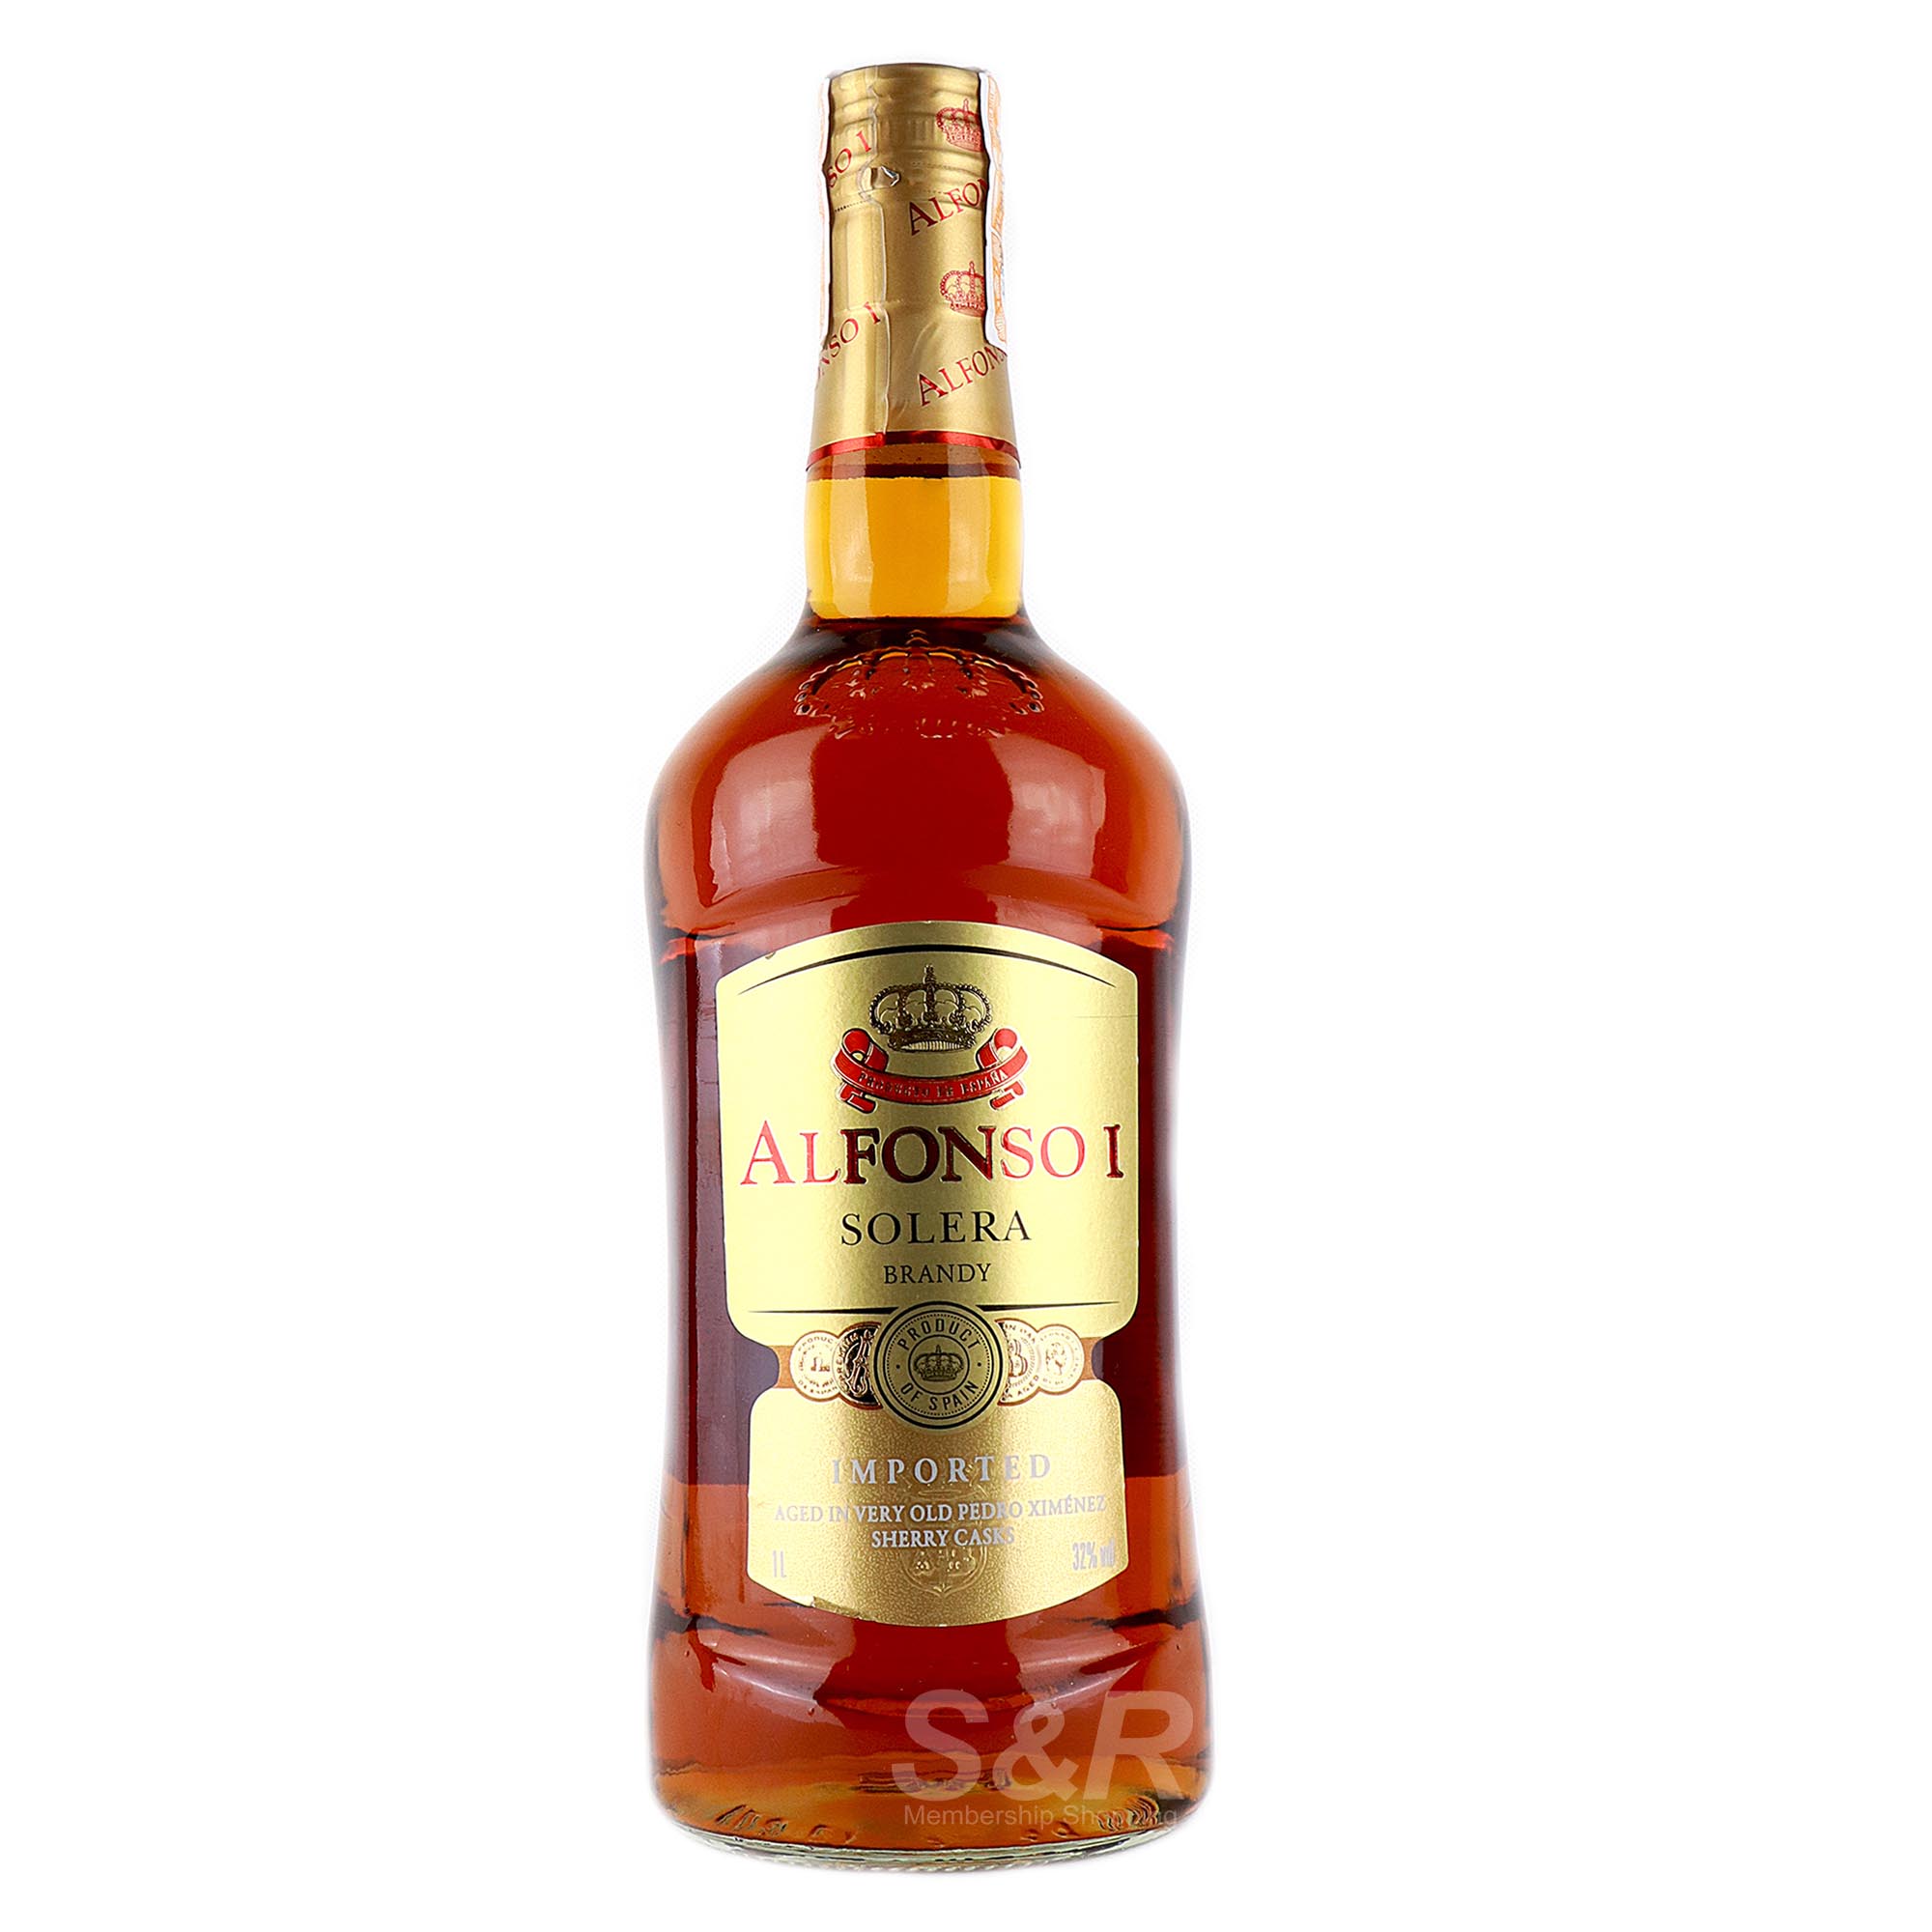 Alfonso 1 Solera Brandy 1L